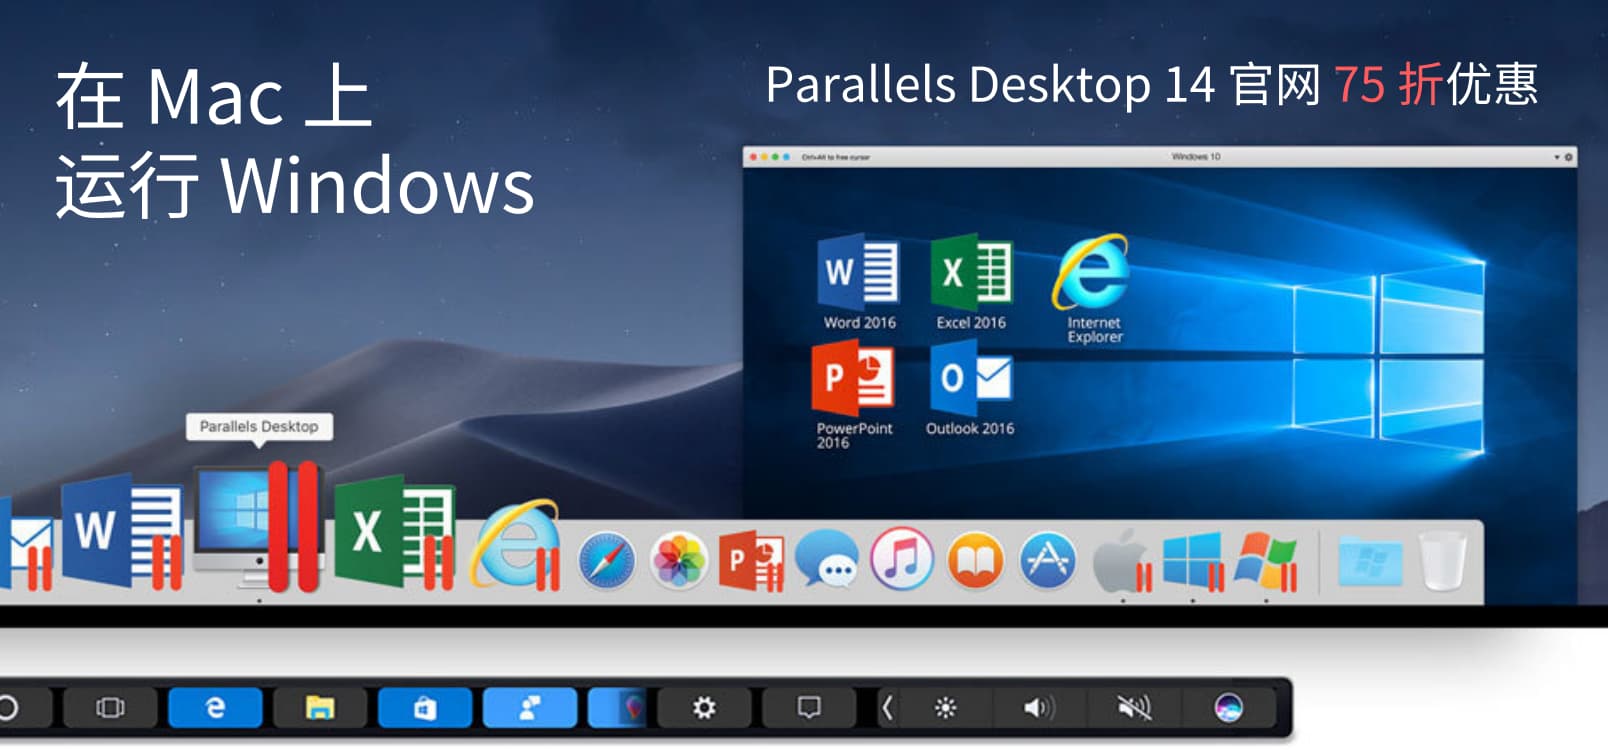 Parallels Desktop 14 官网 75 折优惠，在 Mac 上轻松运行 Windows 1